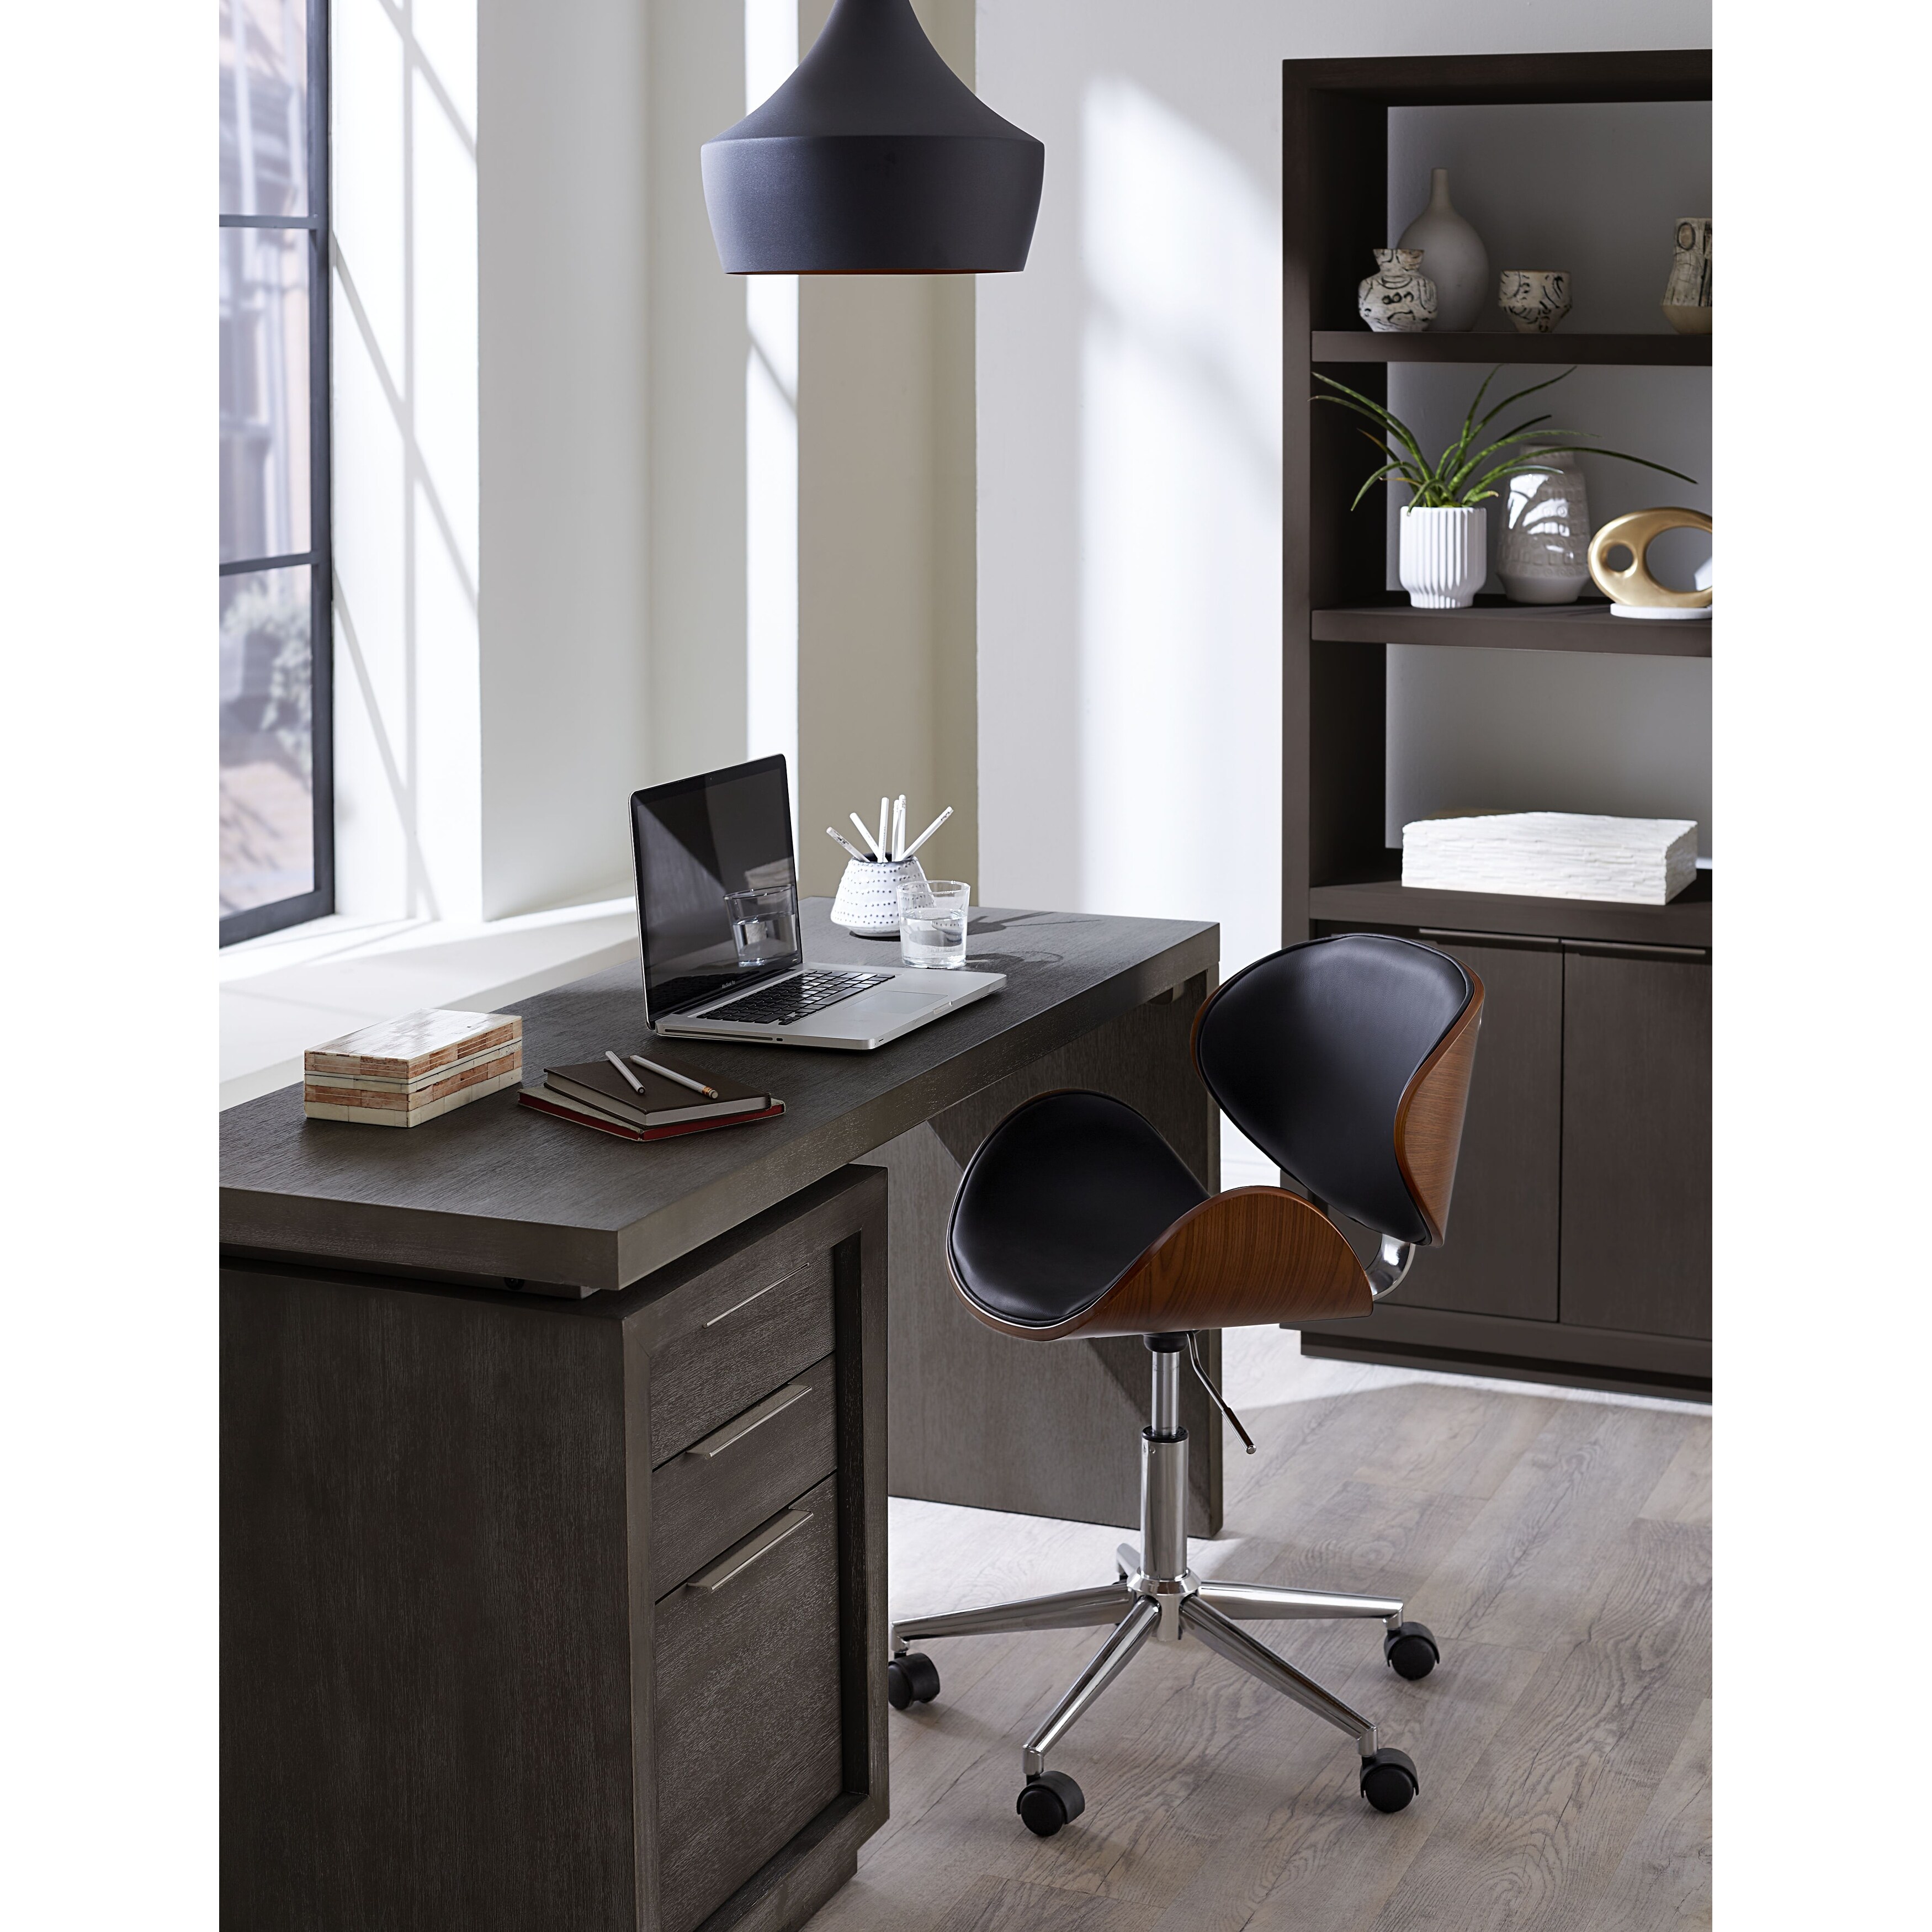 Oxford Single Pedestal Desk in Basalt grey